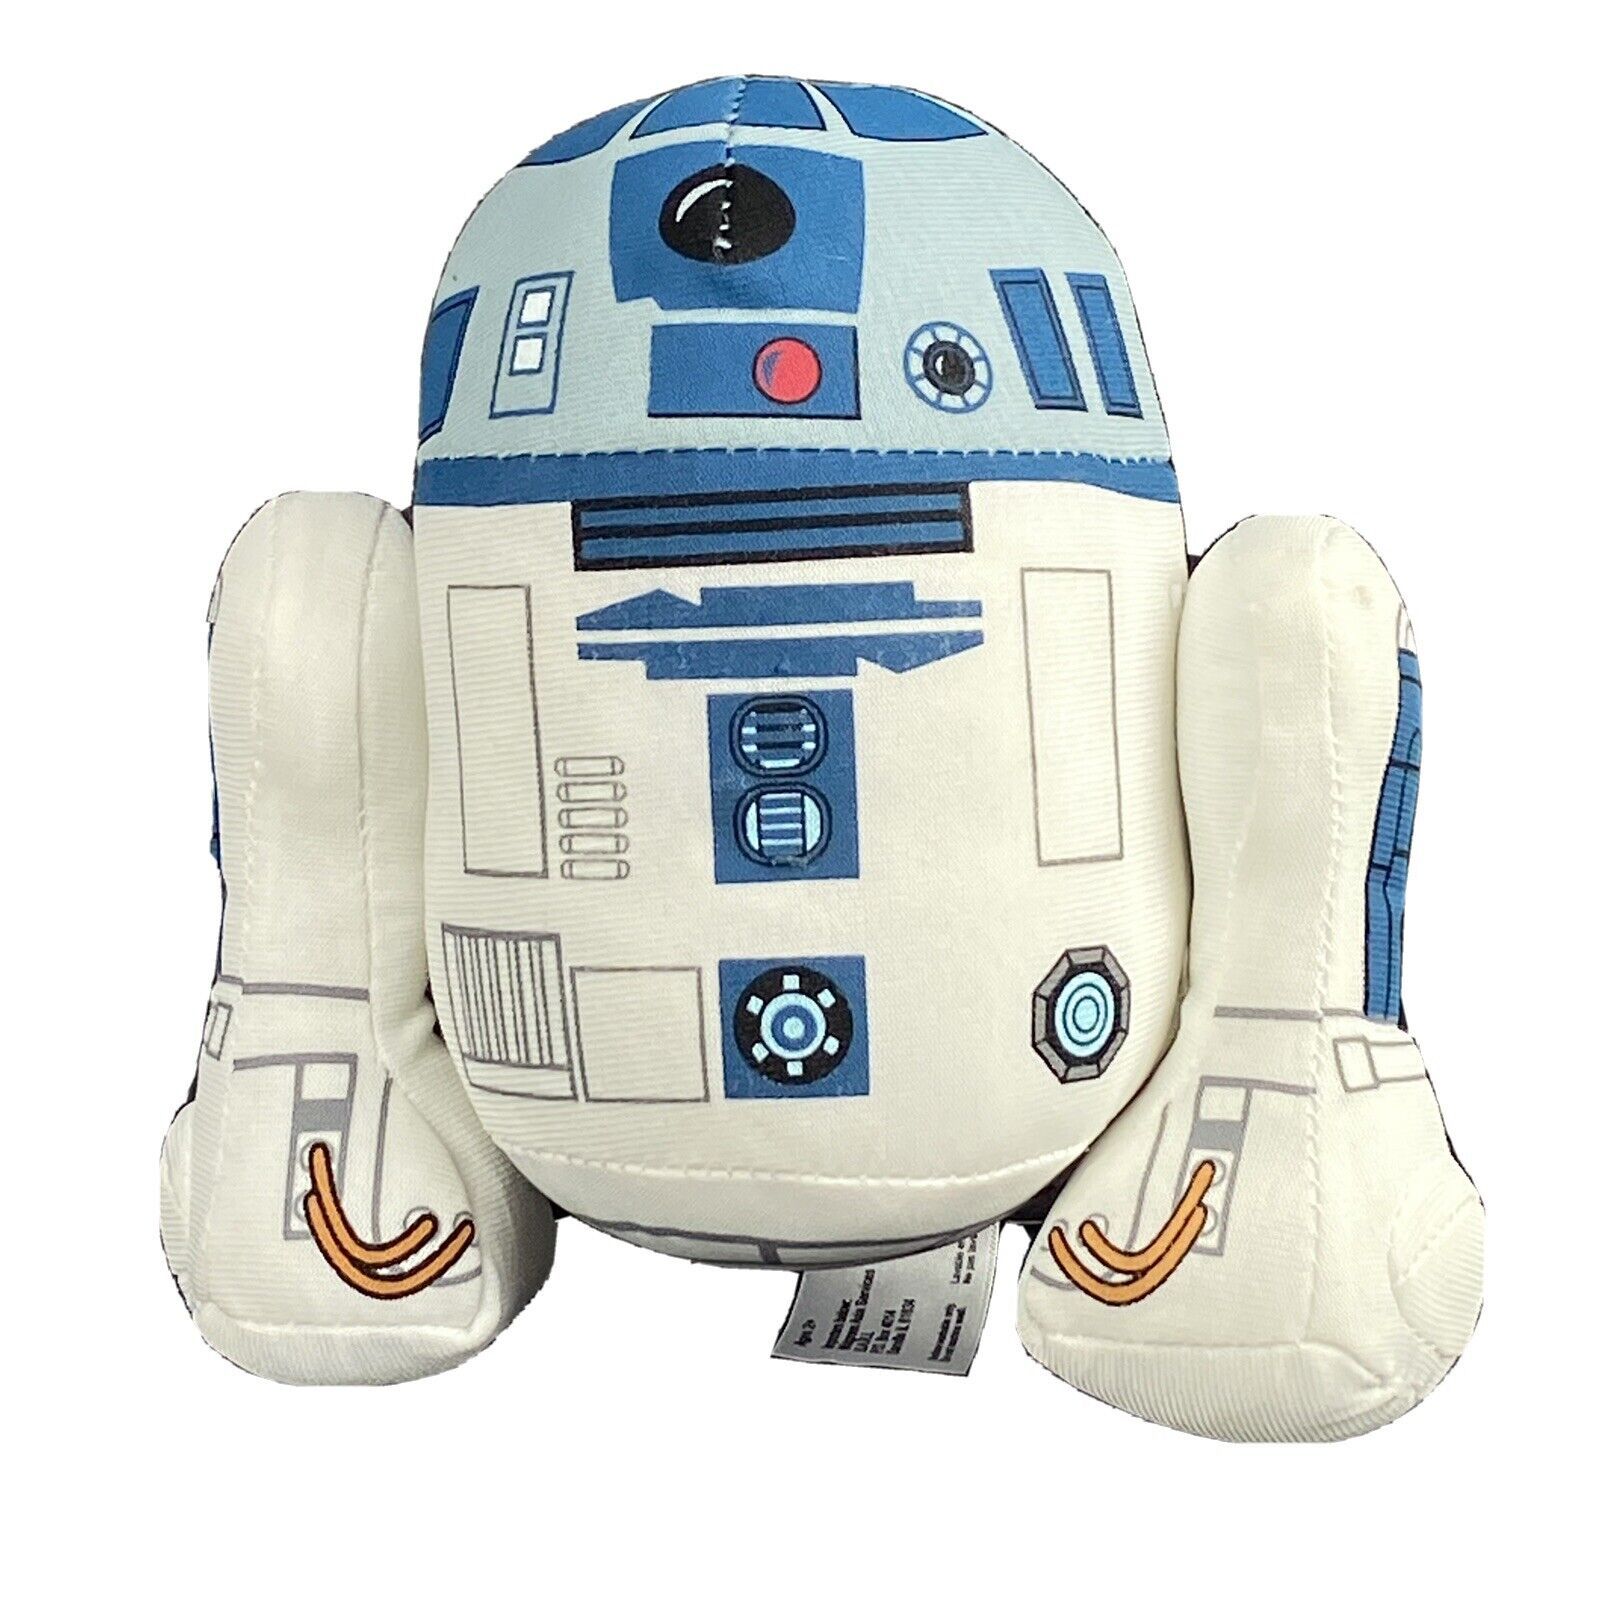 Star Wars R2-D2 Stuffed Plush Doll Sound Works Official Licensed Lucas Films - $12.99